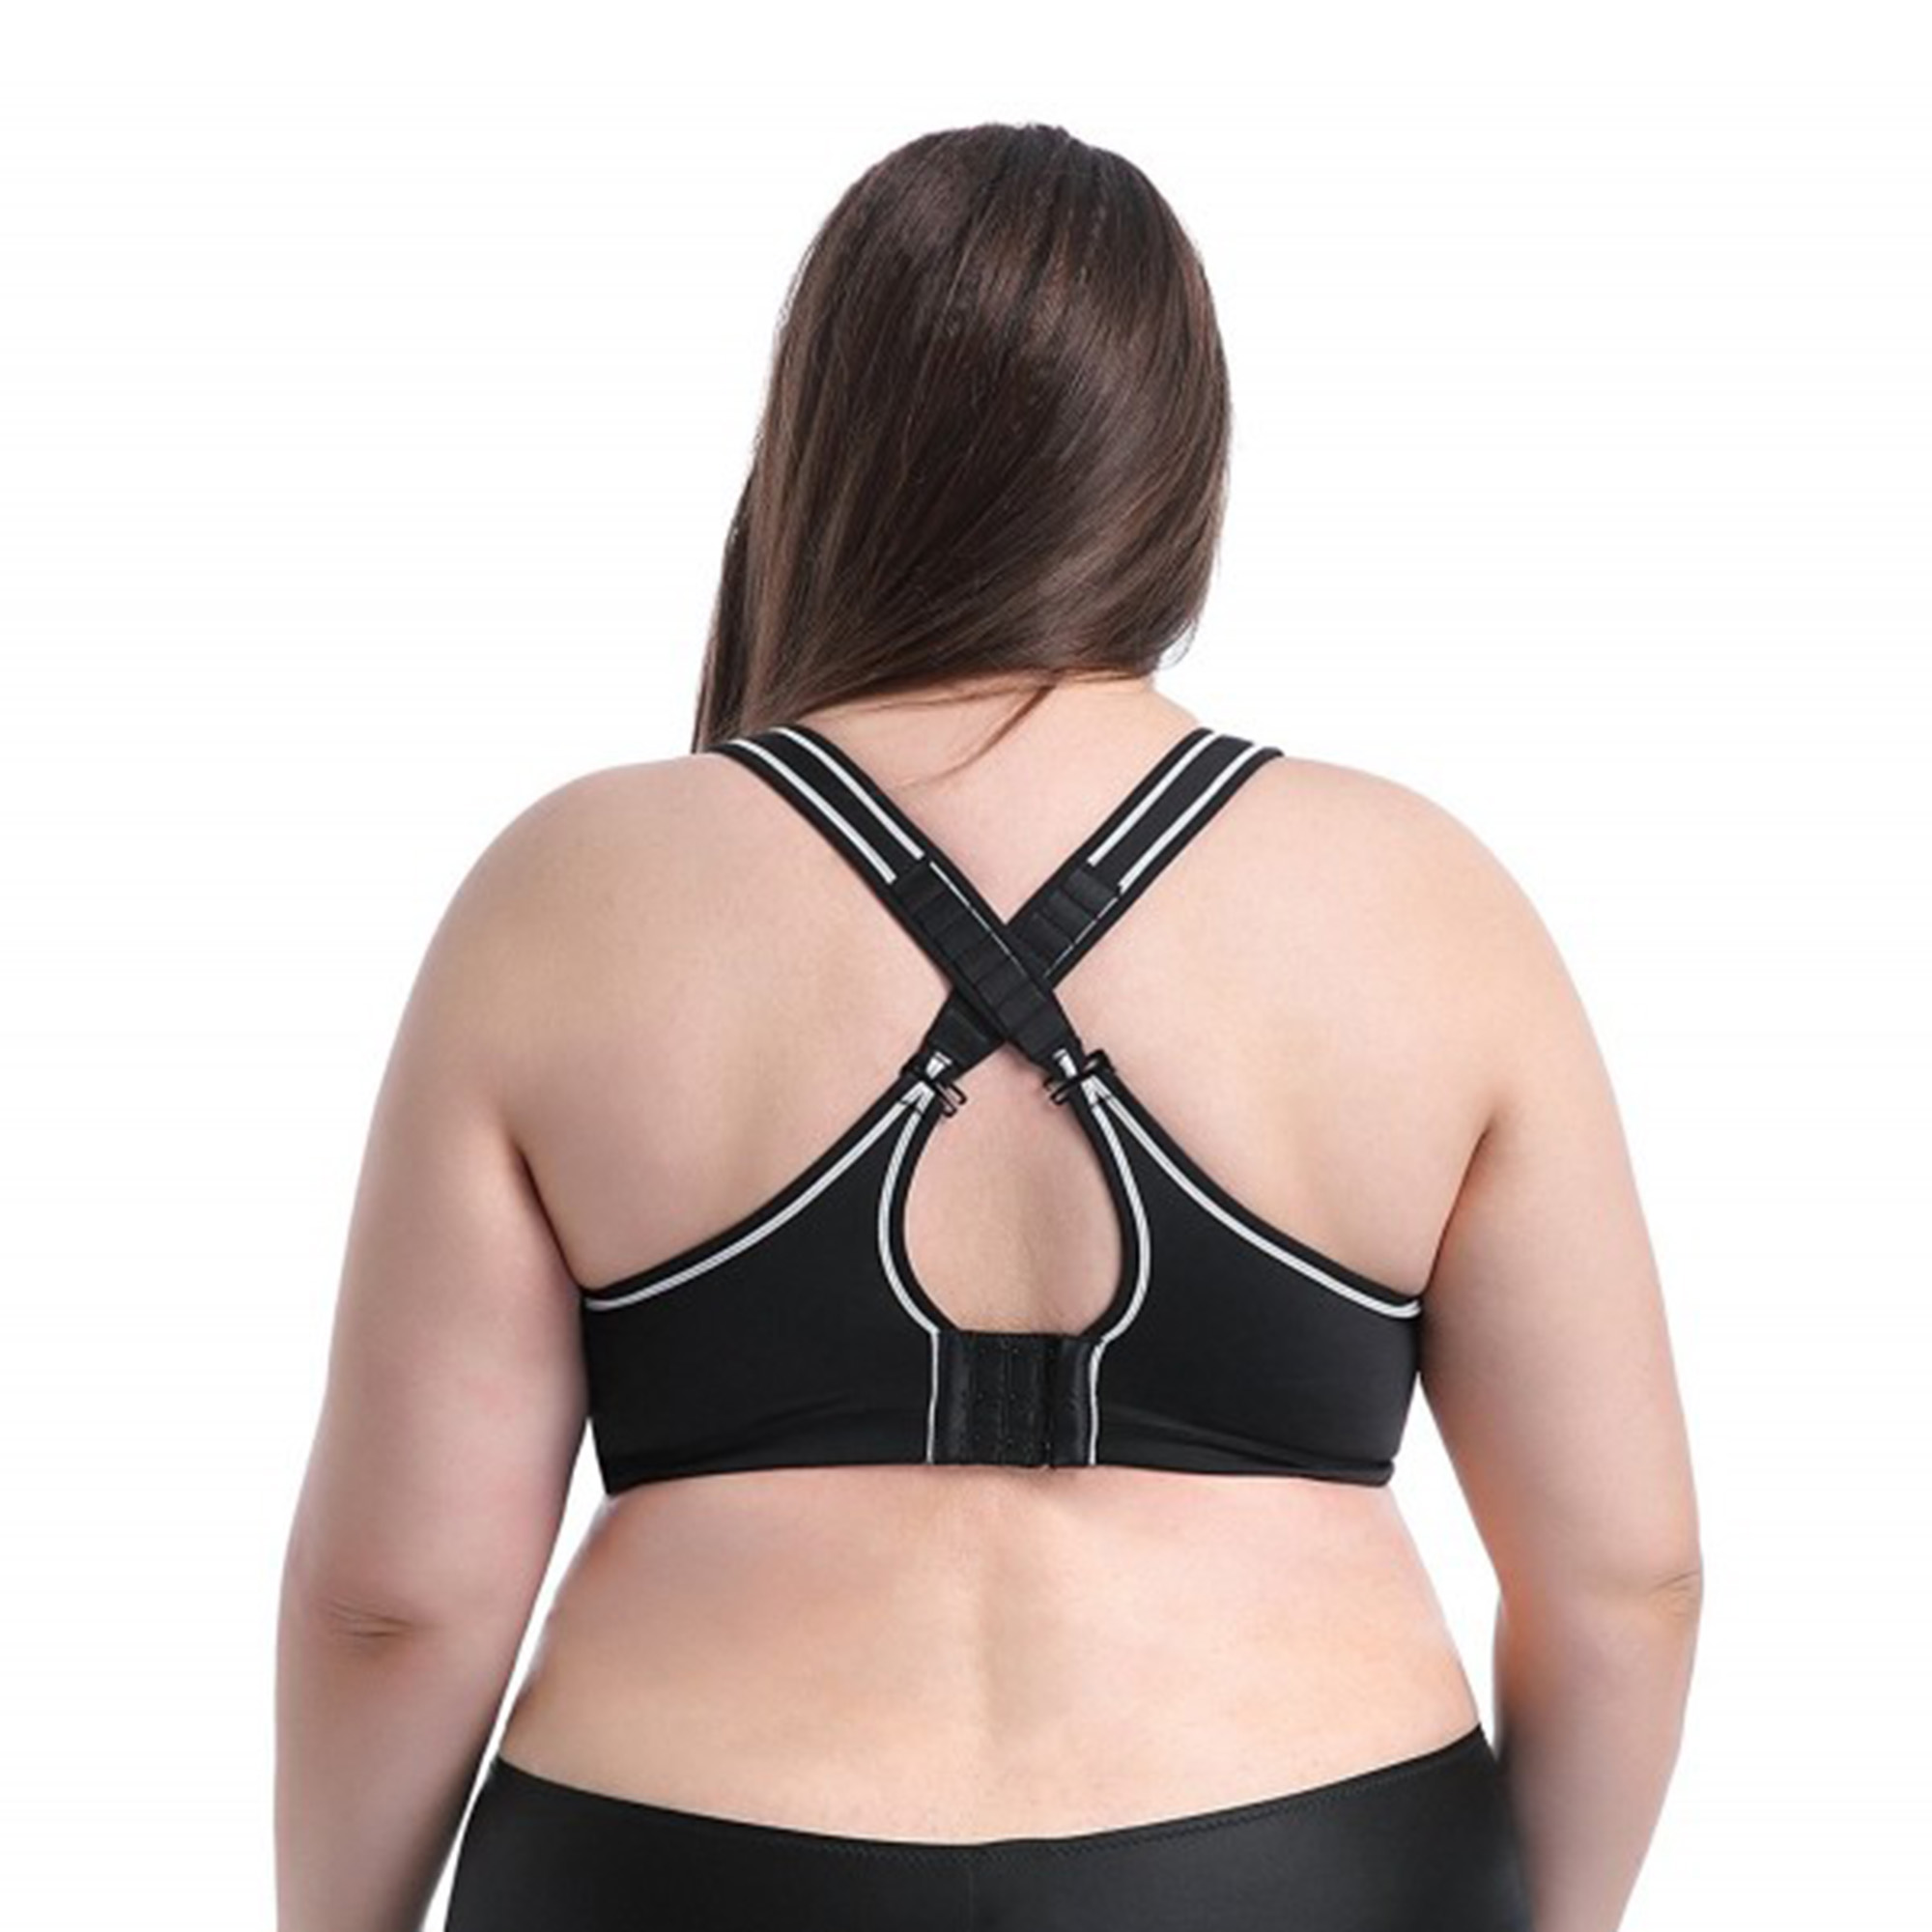 Avenue Body  Women's Plus Size Minimizer Underwire Bra - White - 36dd :  Target